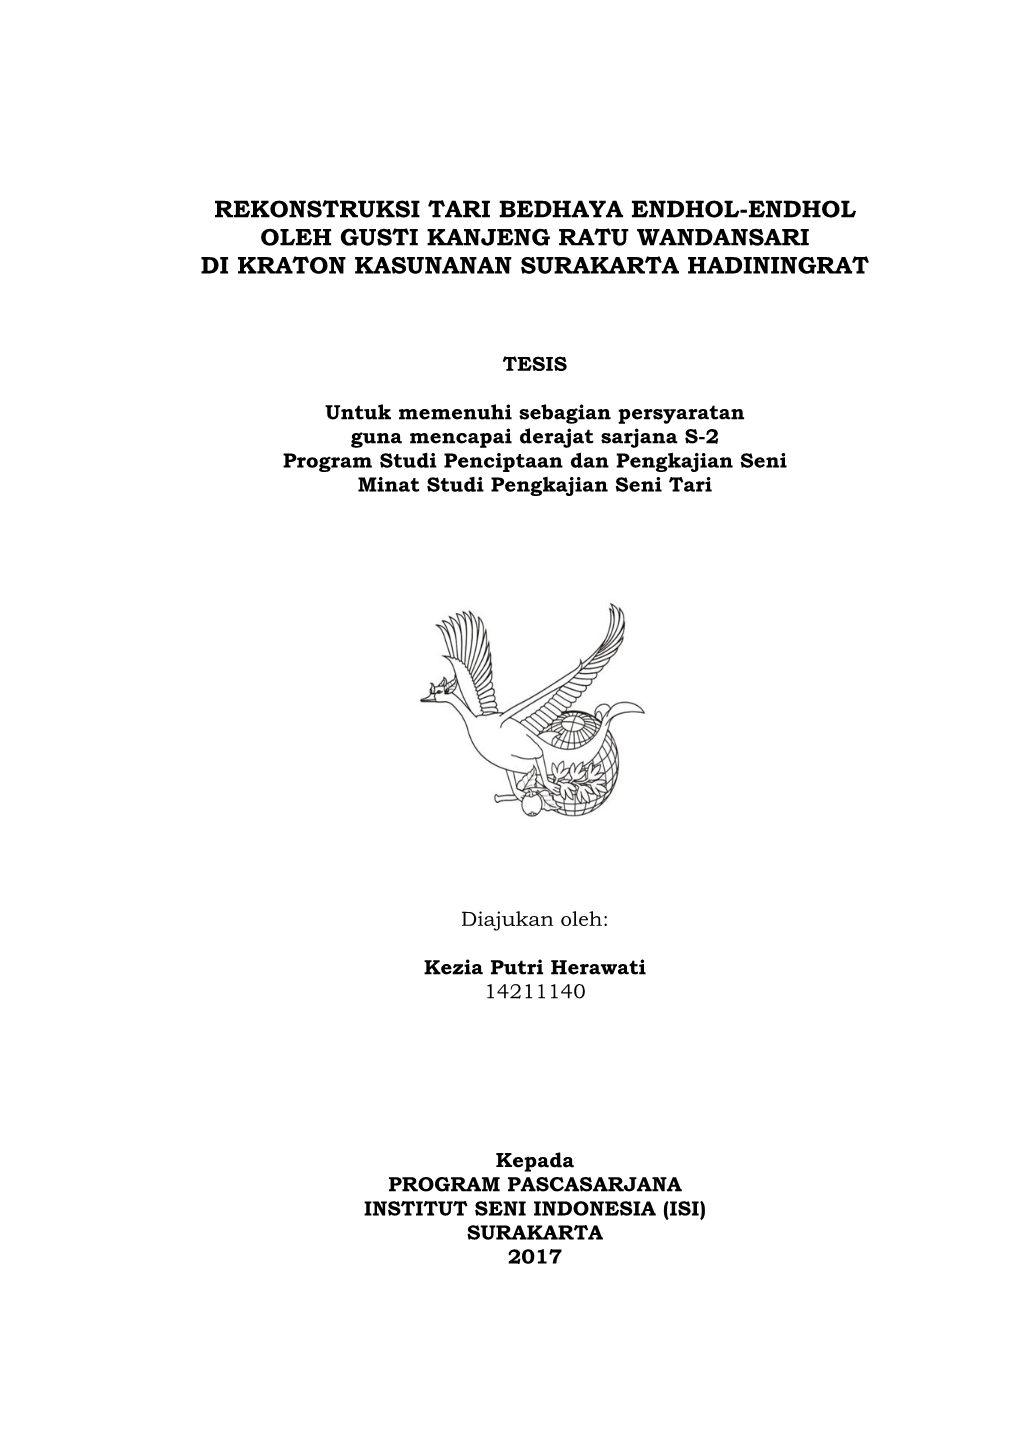 Rekonstruksi Tari Bedhaya Endhol-Endhol Oleh Gusti Kanjeng Ratu Wandansari Di Kraton Kasunanan Surakarta Hadiningrat